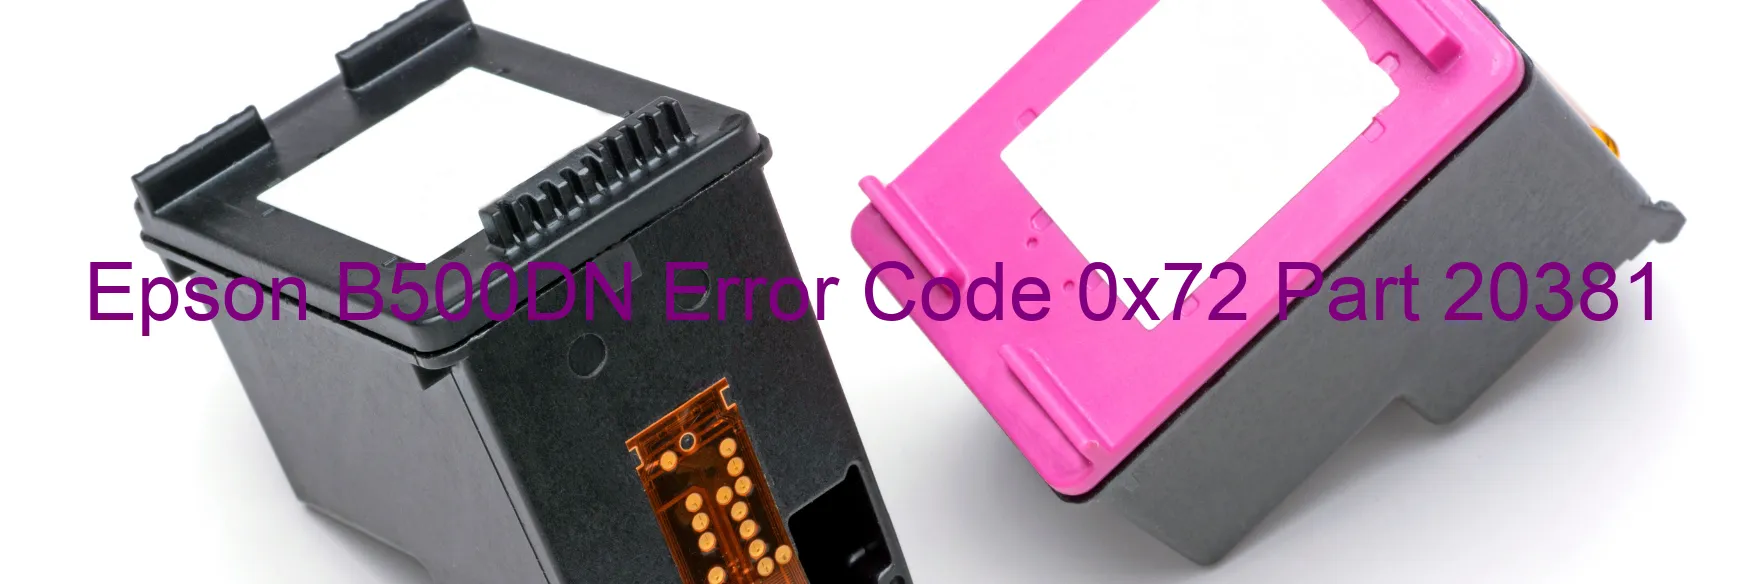 Epson B500DN Error Code 0x72 Part 20381